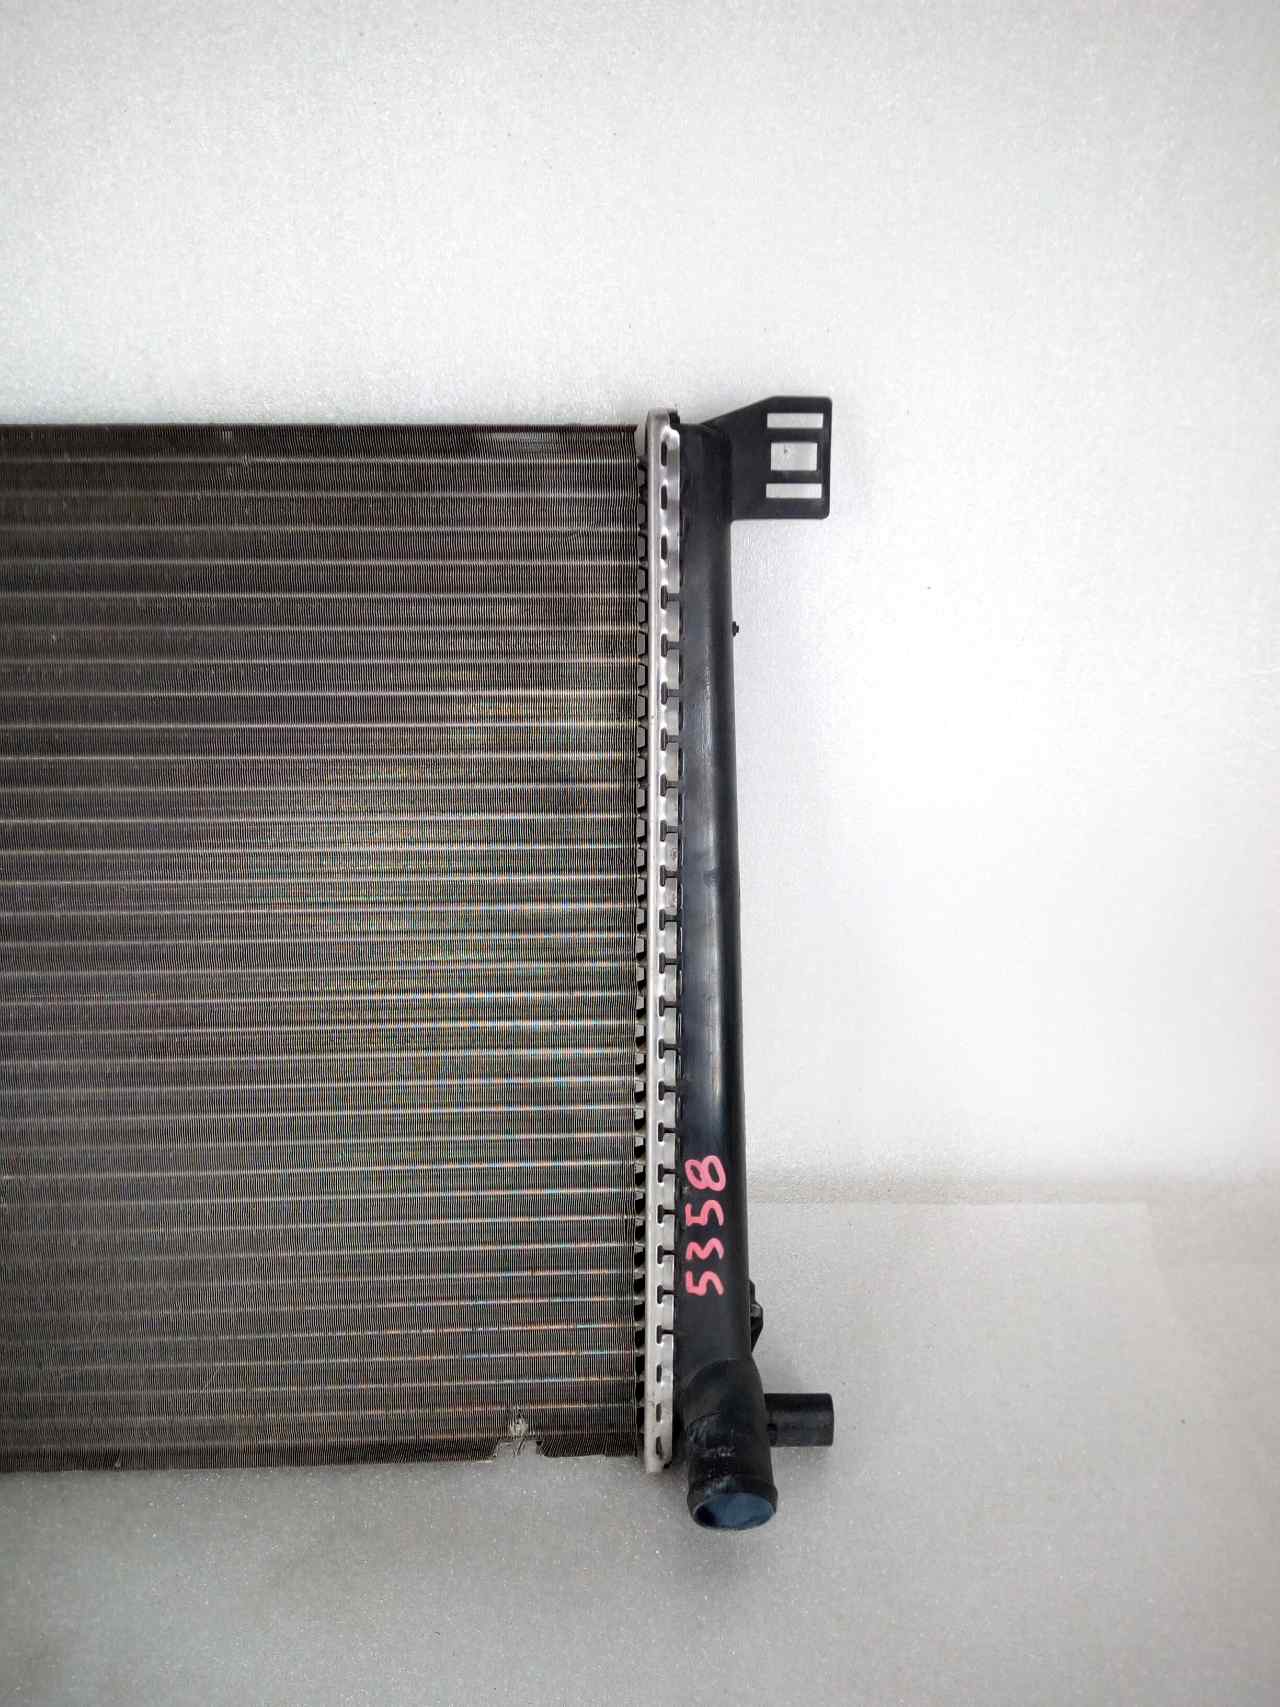 MINI Cooper R56 (2006-2015) Air Con radiator 753509904 20072241